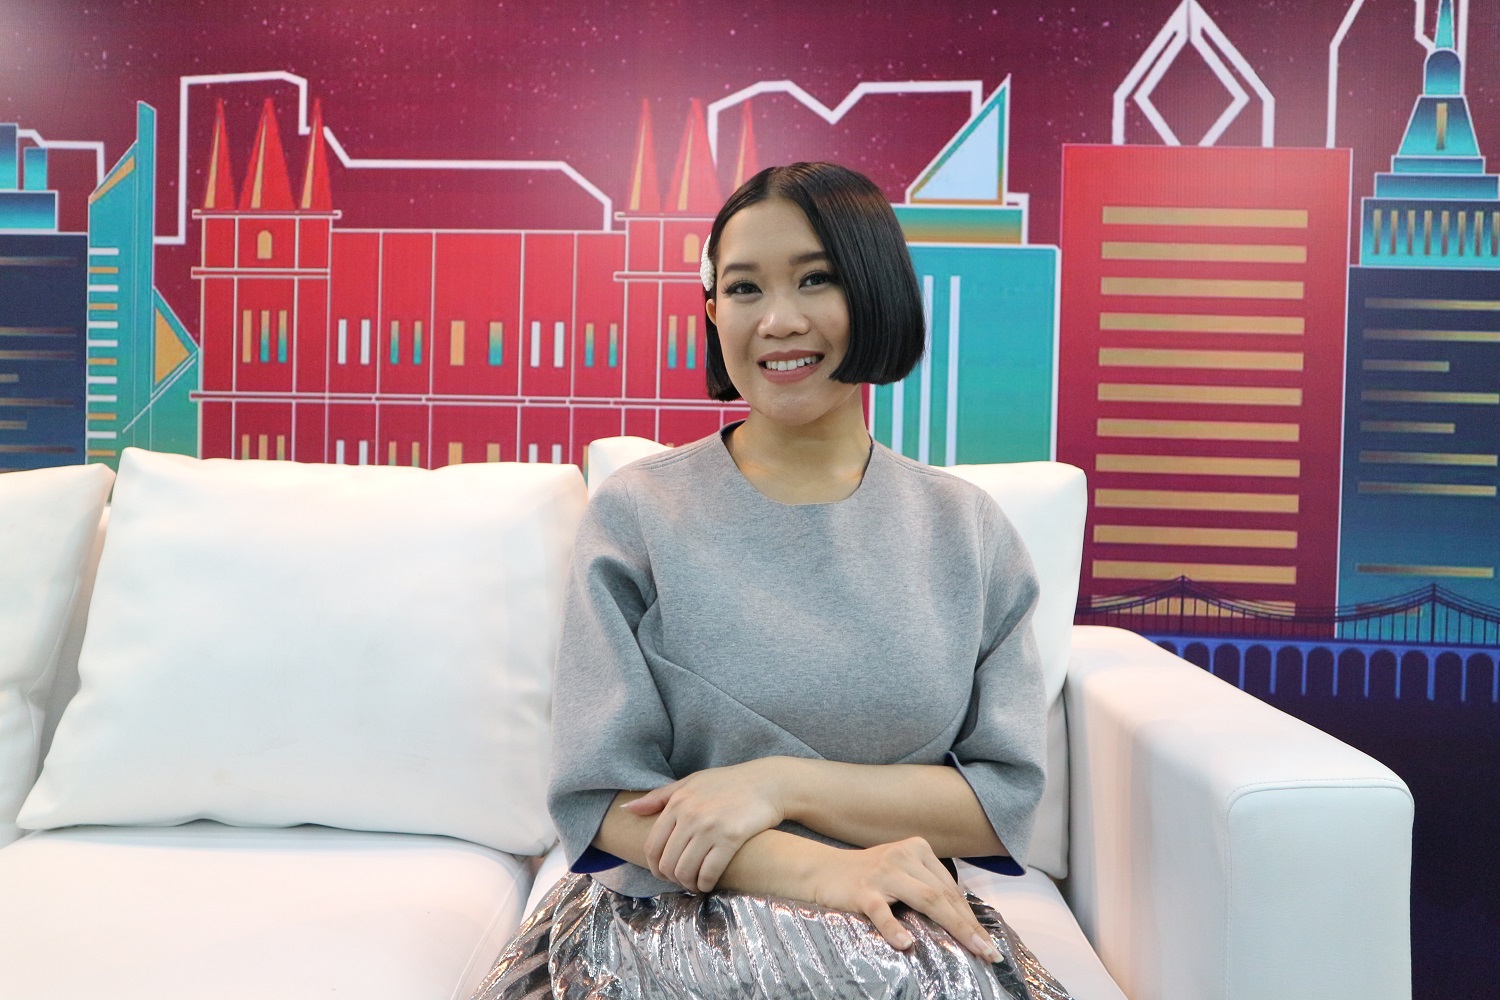 CreativeDisc Interview with Radhini: Cerita di Balik Pembuatan Single "FLY" dan "LELAH"